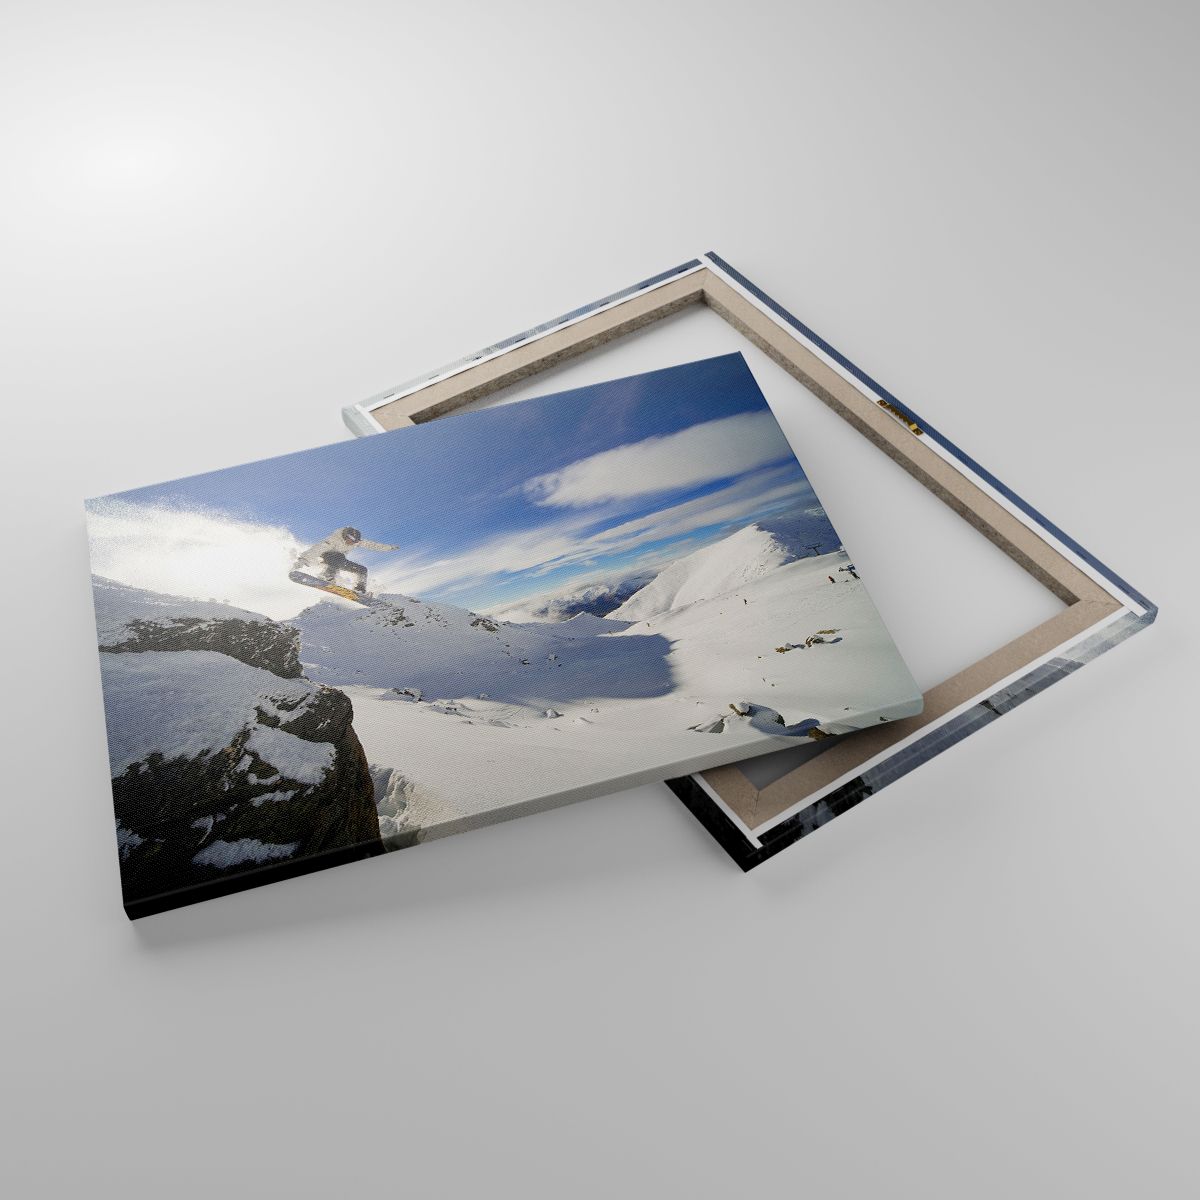 Leinwandbild Snowboard, Leinwandbild Landschaft, Leinwandbild Berge, Leinwandbild Schnee, Leinwandbild Sport